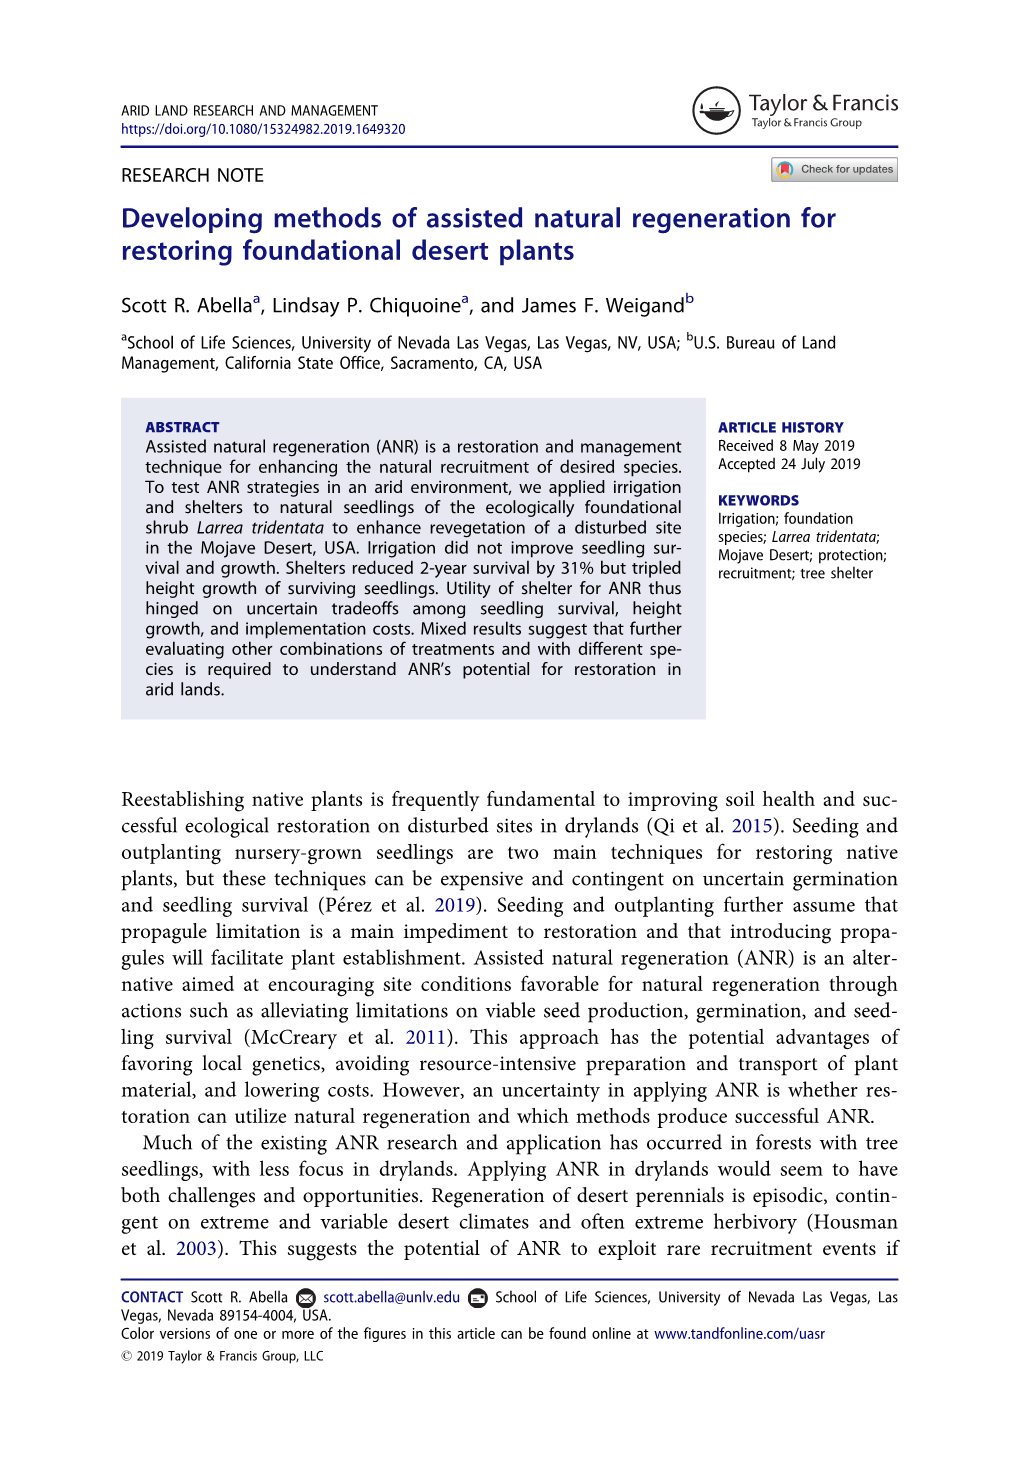 Developing Methods of Assisted Natural Regeneration for Restoring Foundational Desert Plants